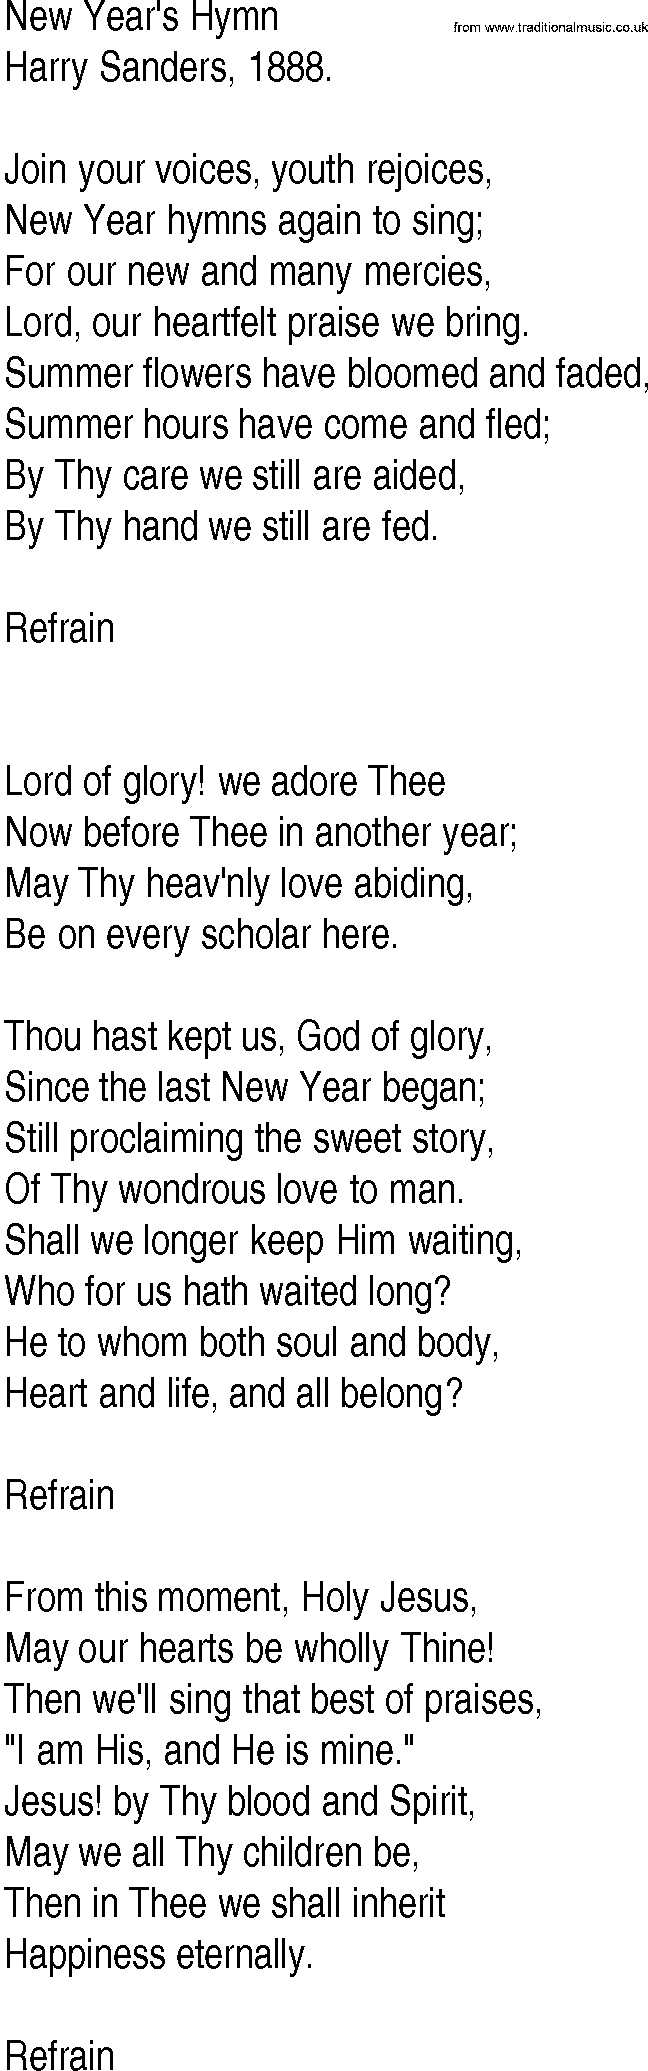 Hymn and Gospel Song: New Year's Hymn by Harry Sanders lyrics